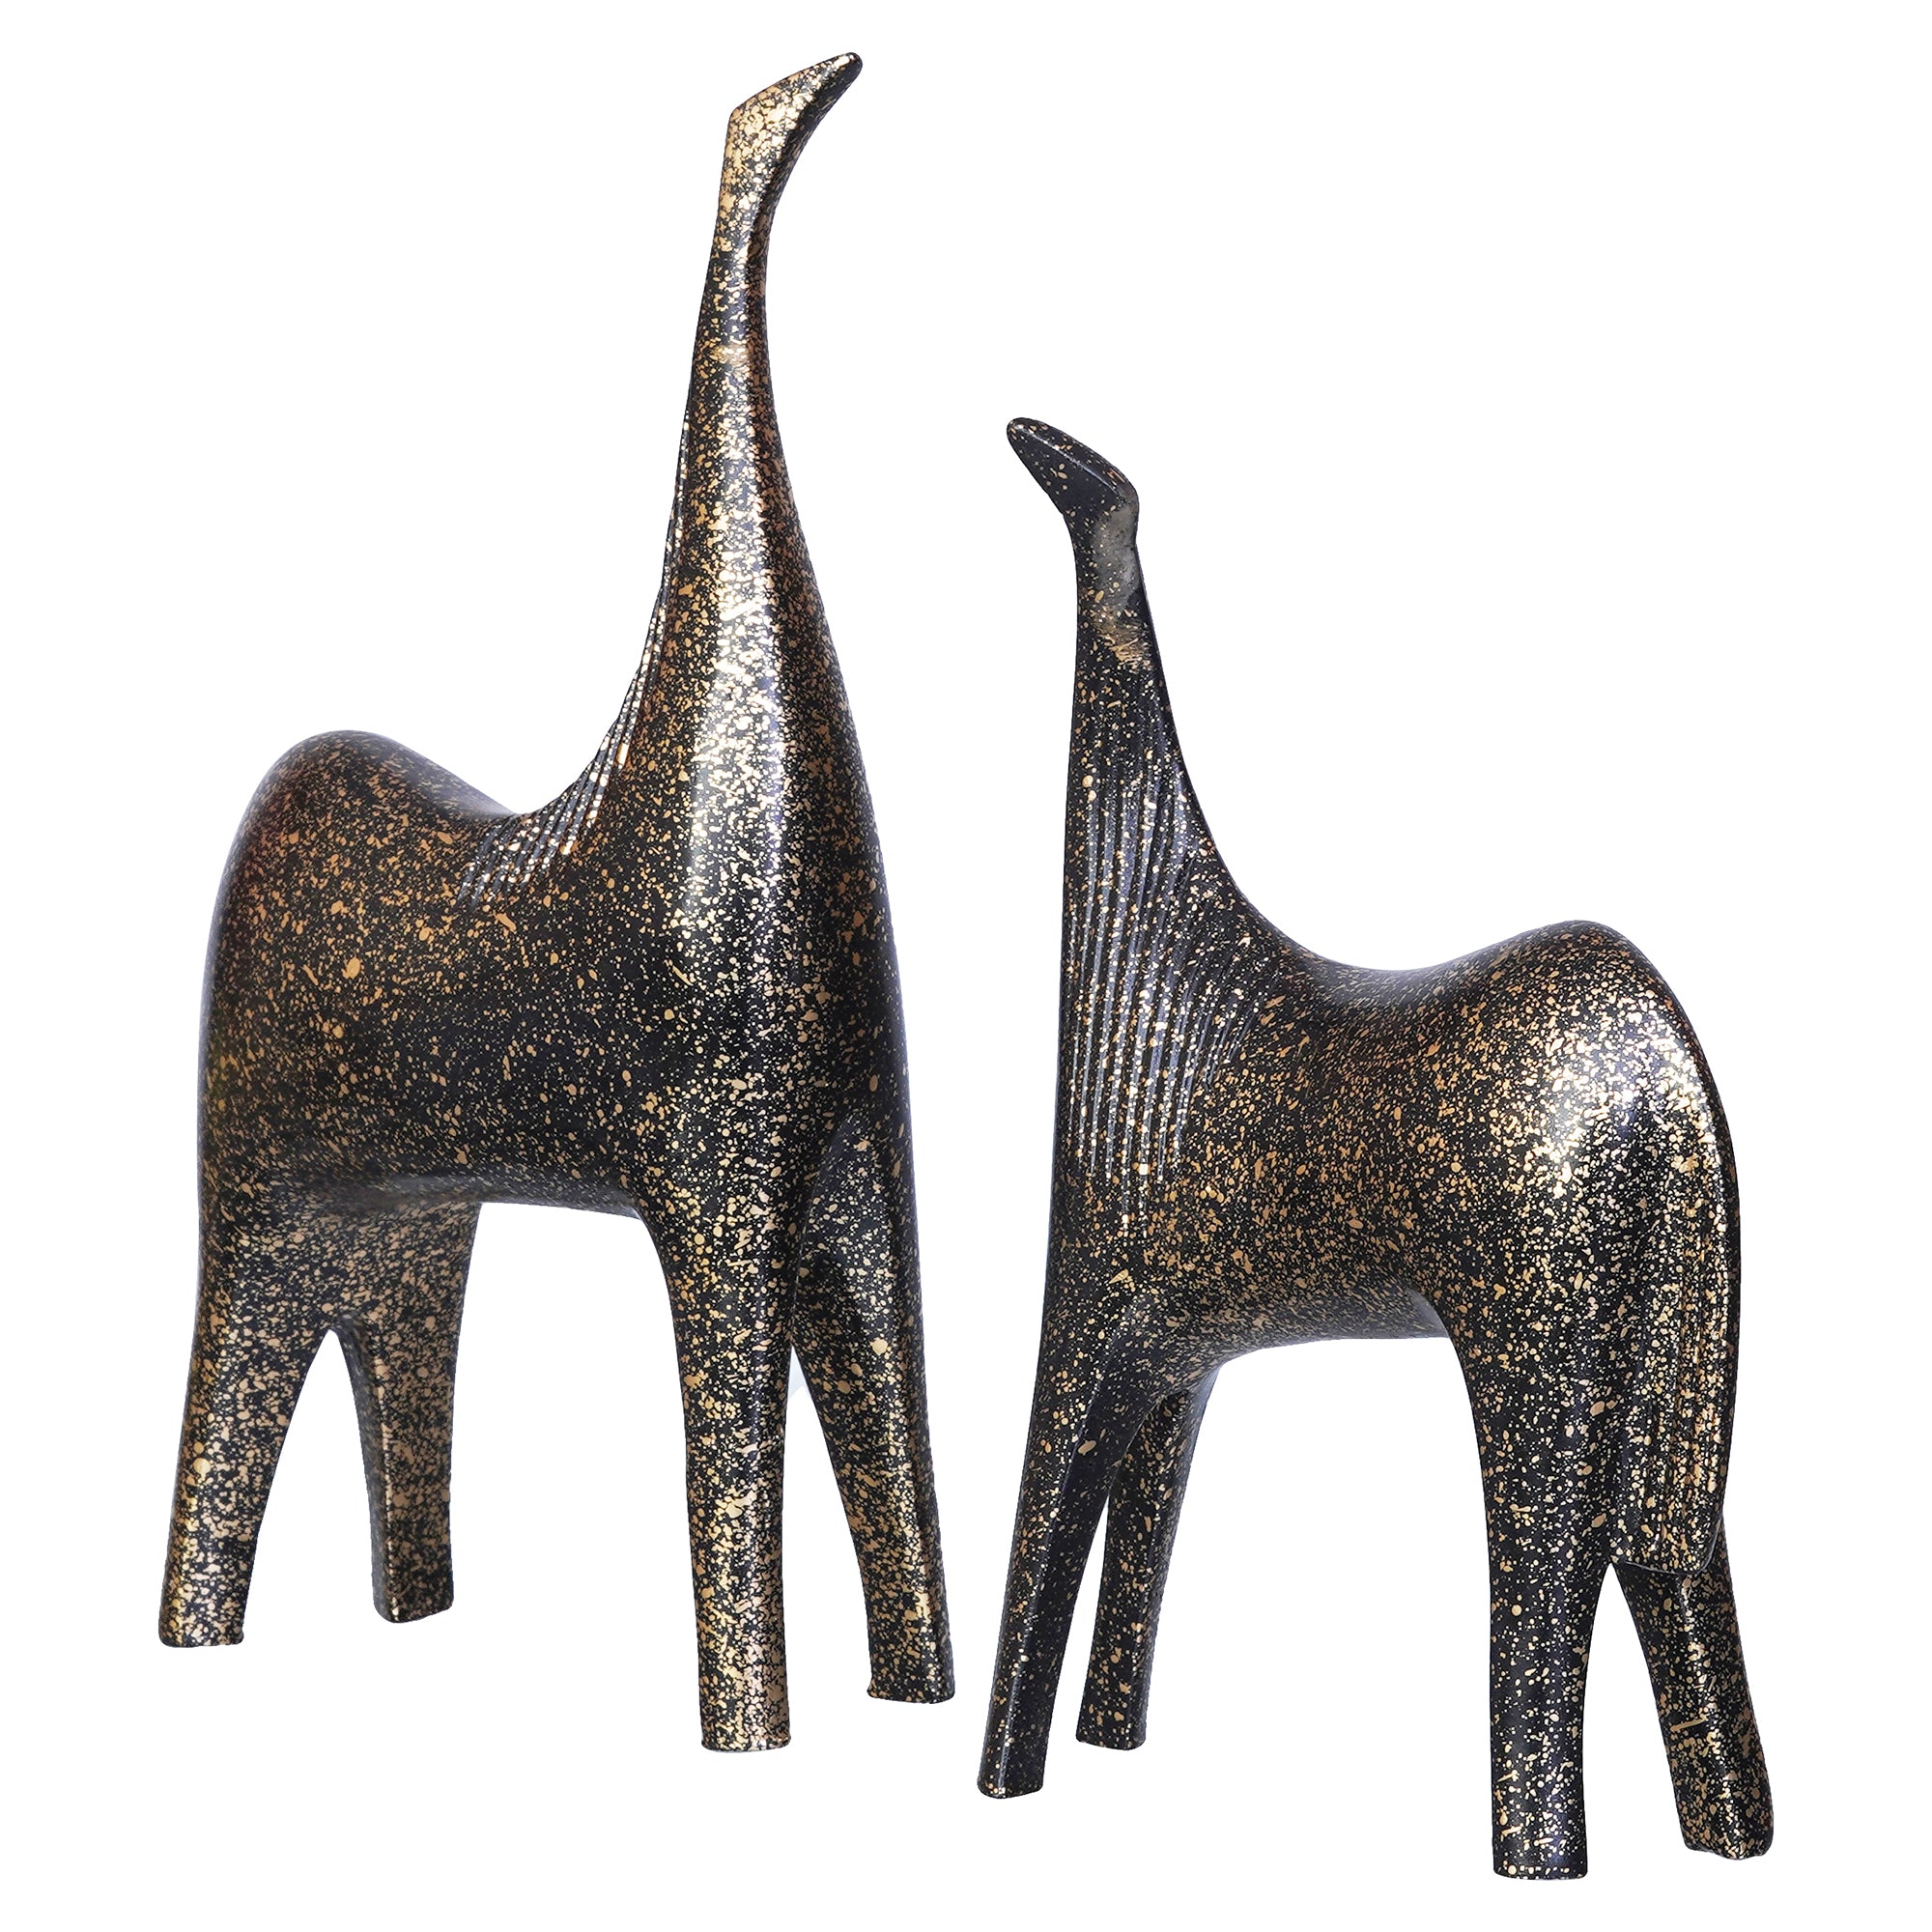 Set of 2 Black & Golden Horse Statues Decorative Animal Figurines 8